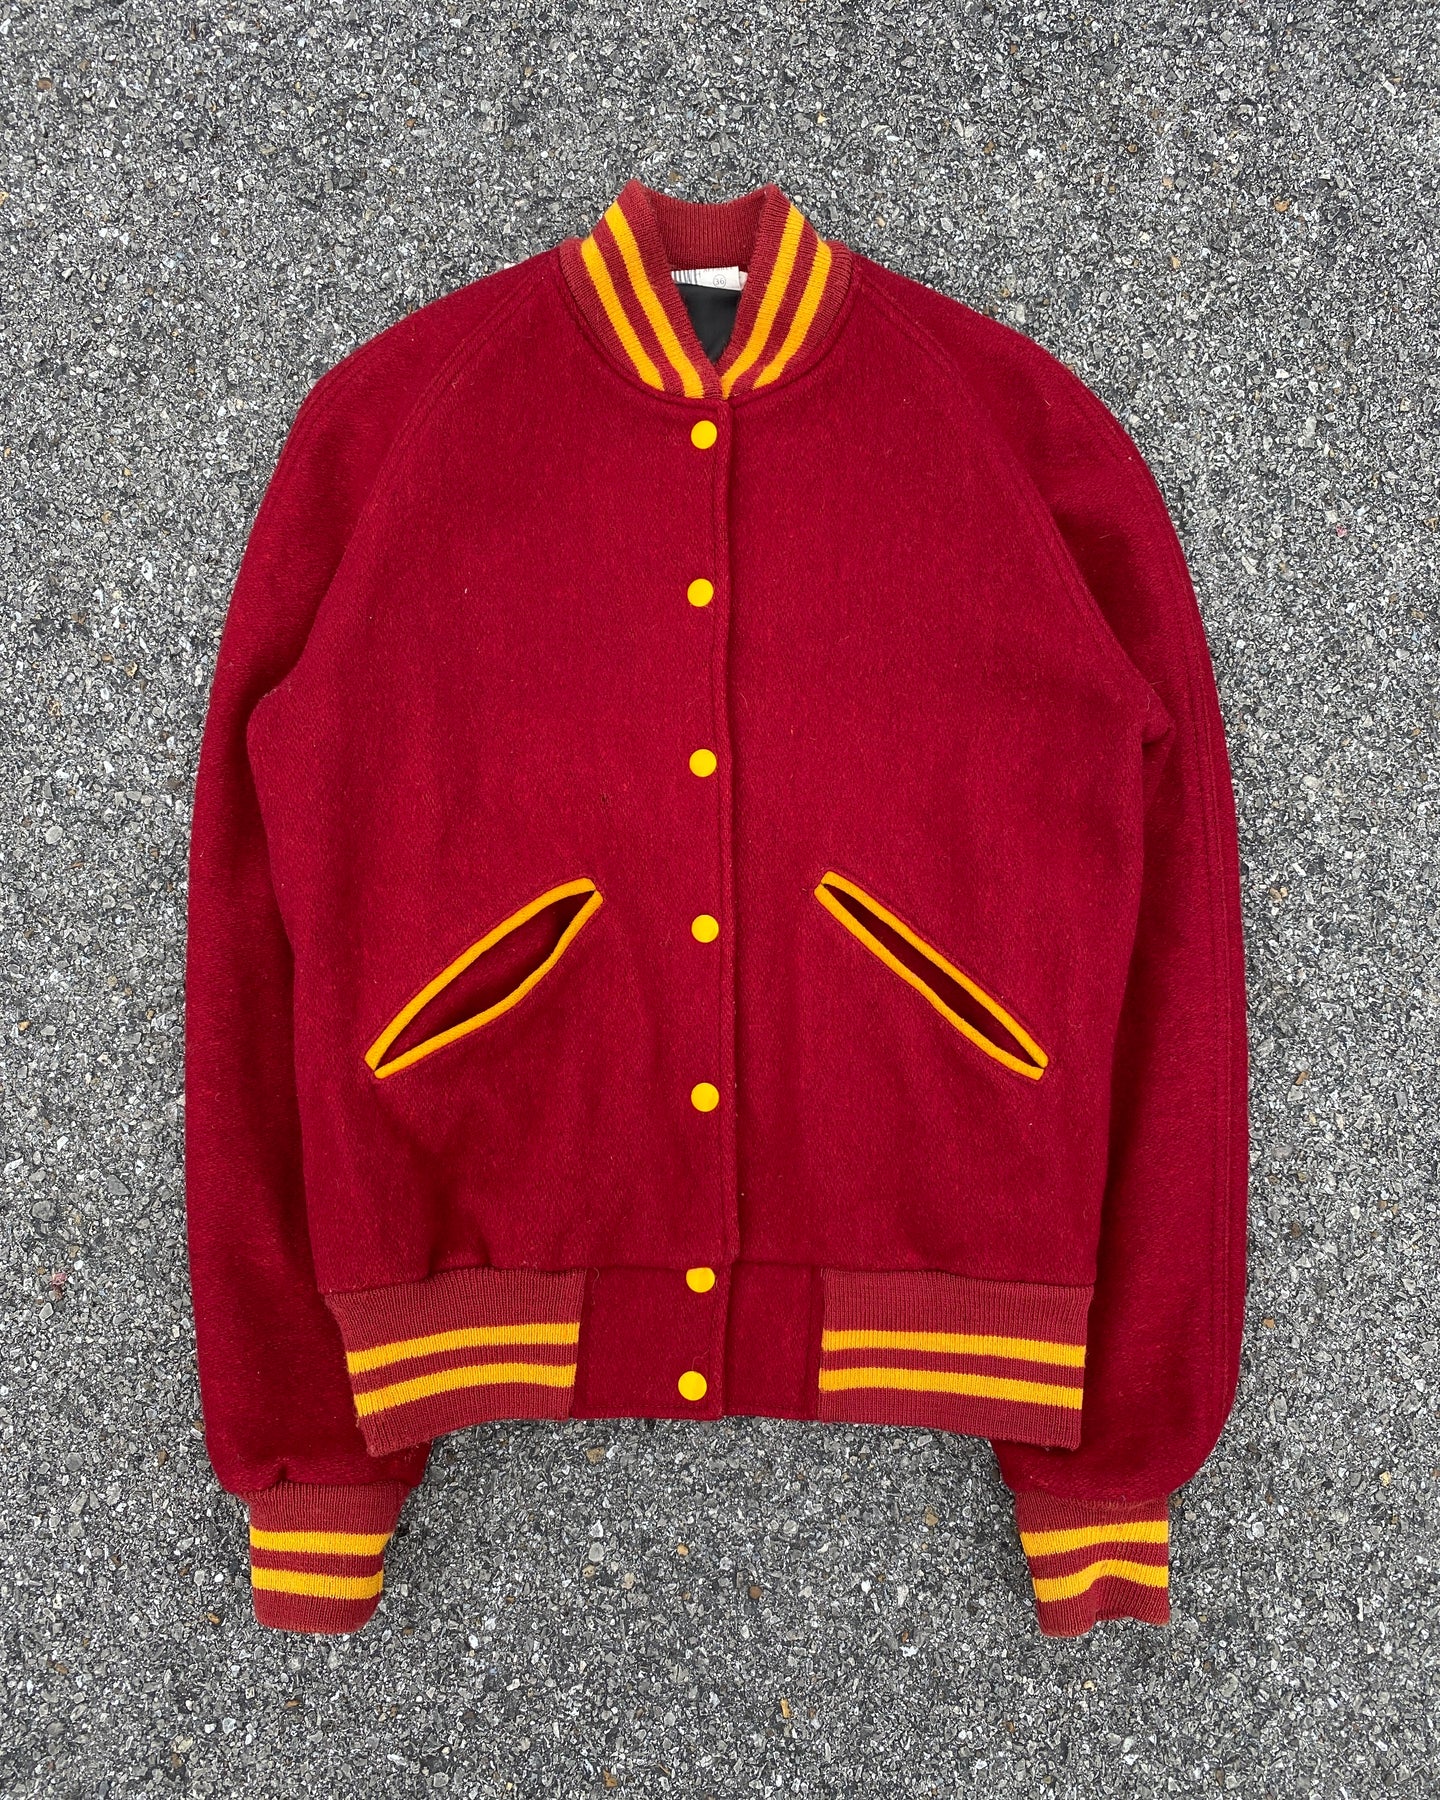 1980s Blank Varsity Jacket - Size Medium